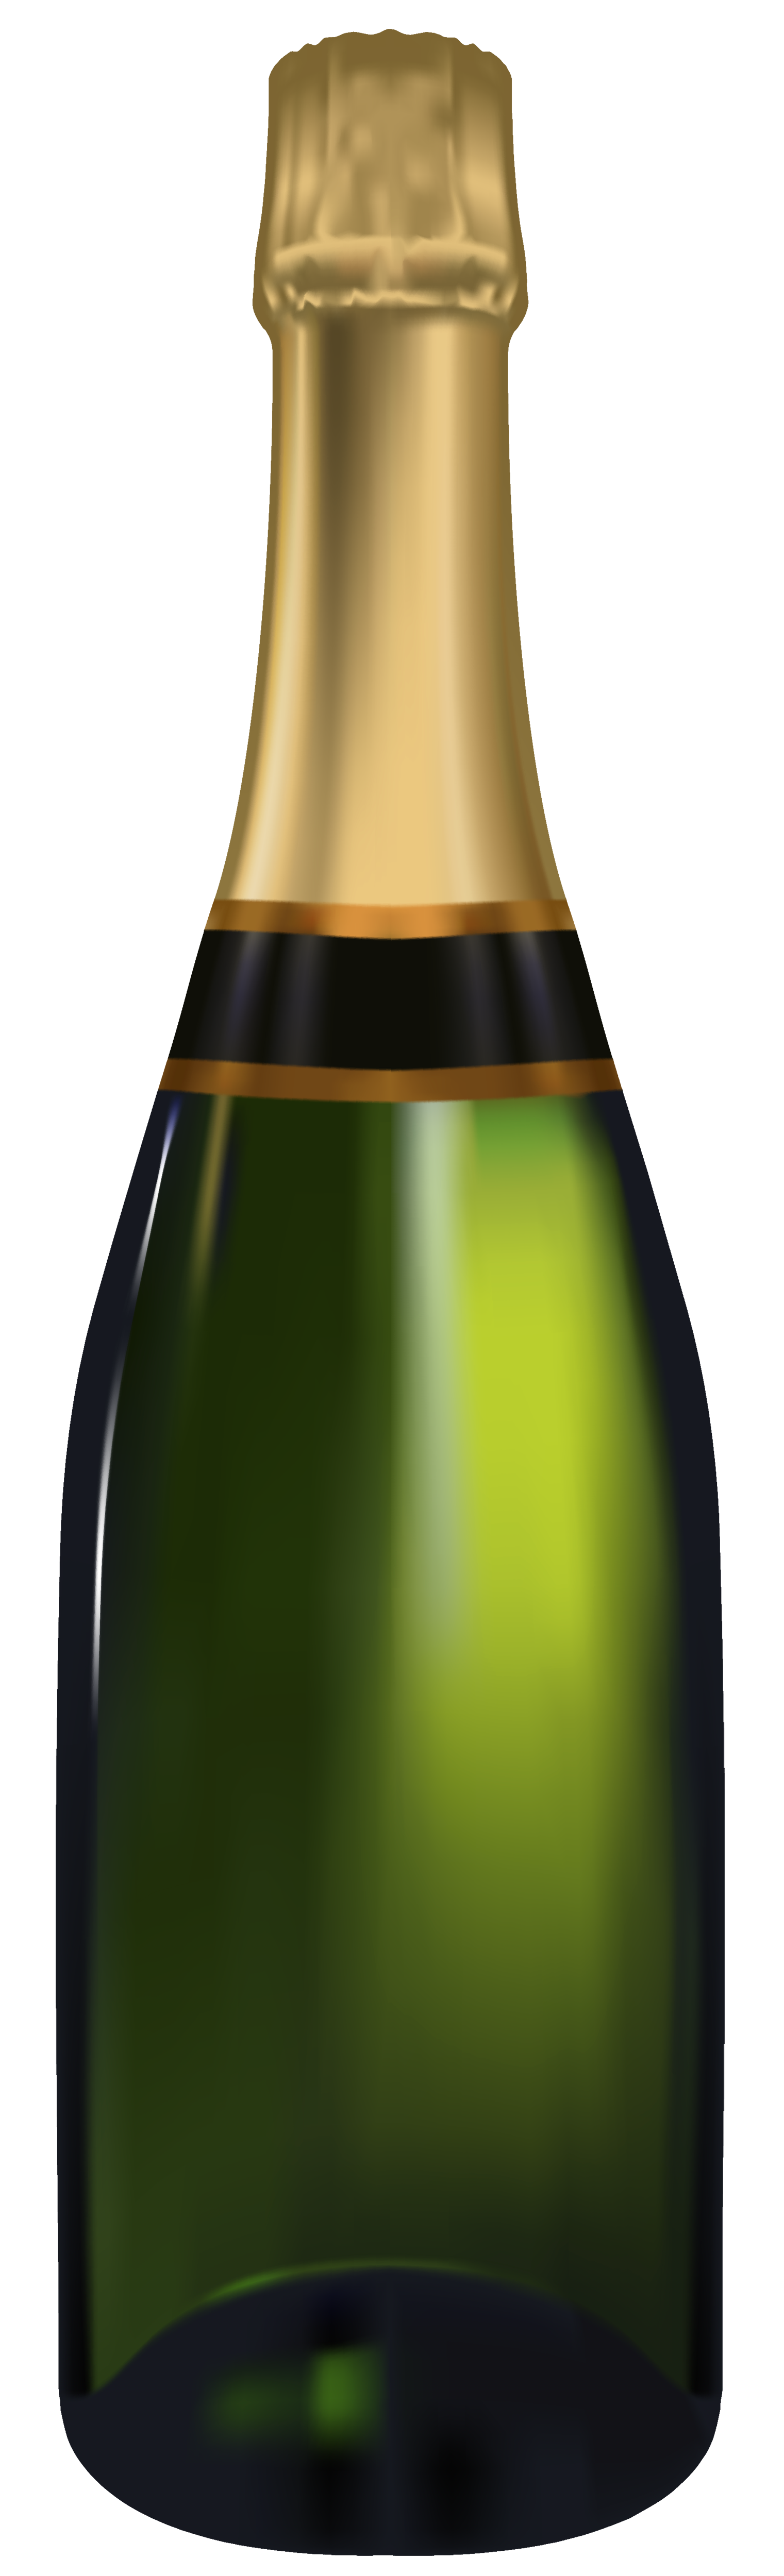 Champagne Bottle Png Clipart Best Web Clipart